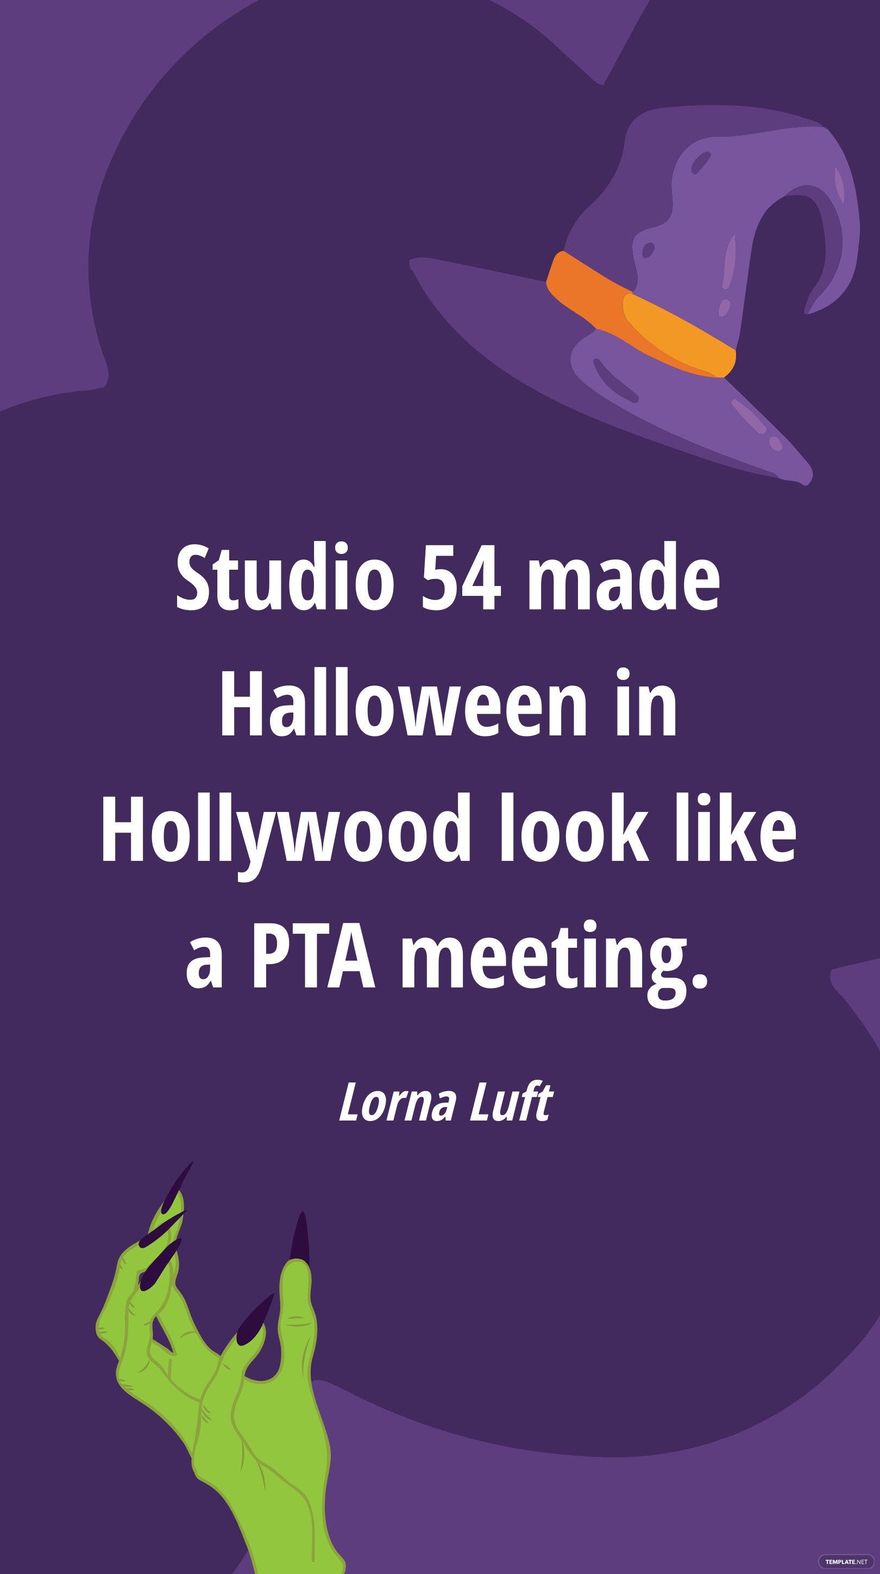 Lorna Luft - Studio 54 made Halloween in Hollywood look like a PTA meeting.